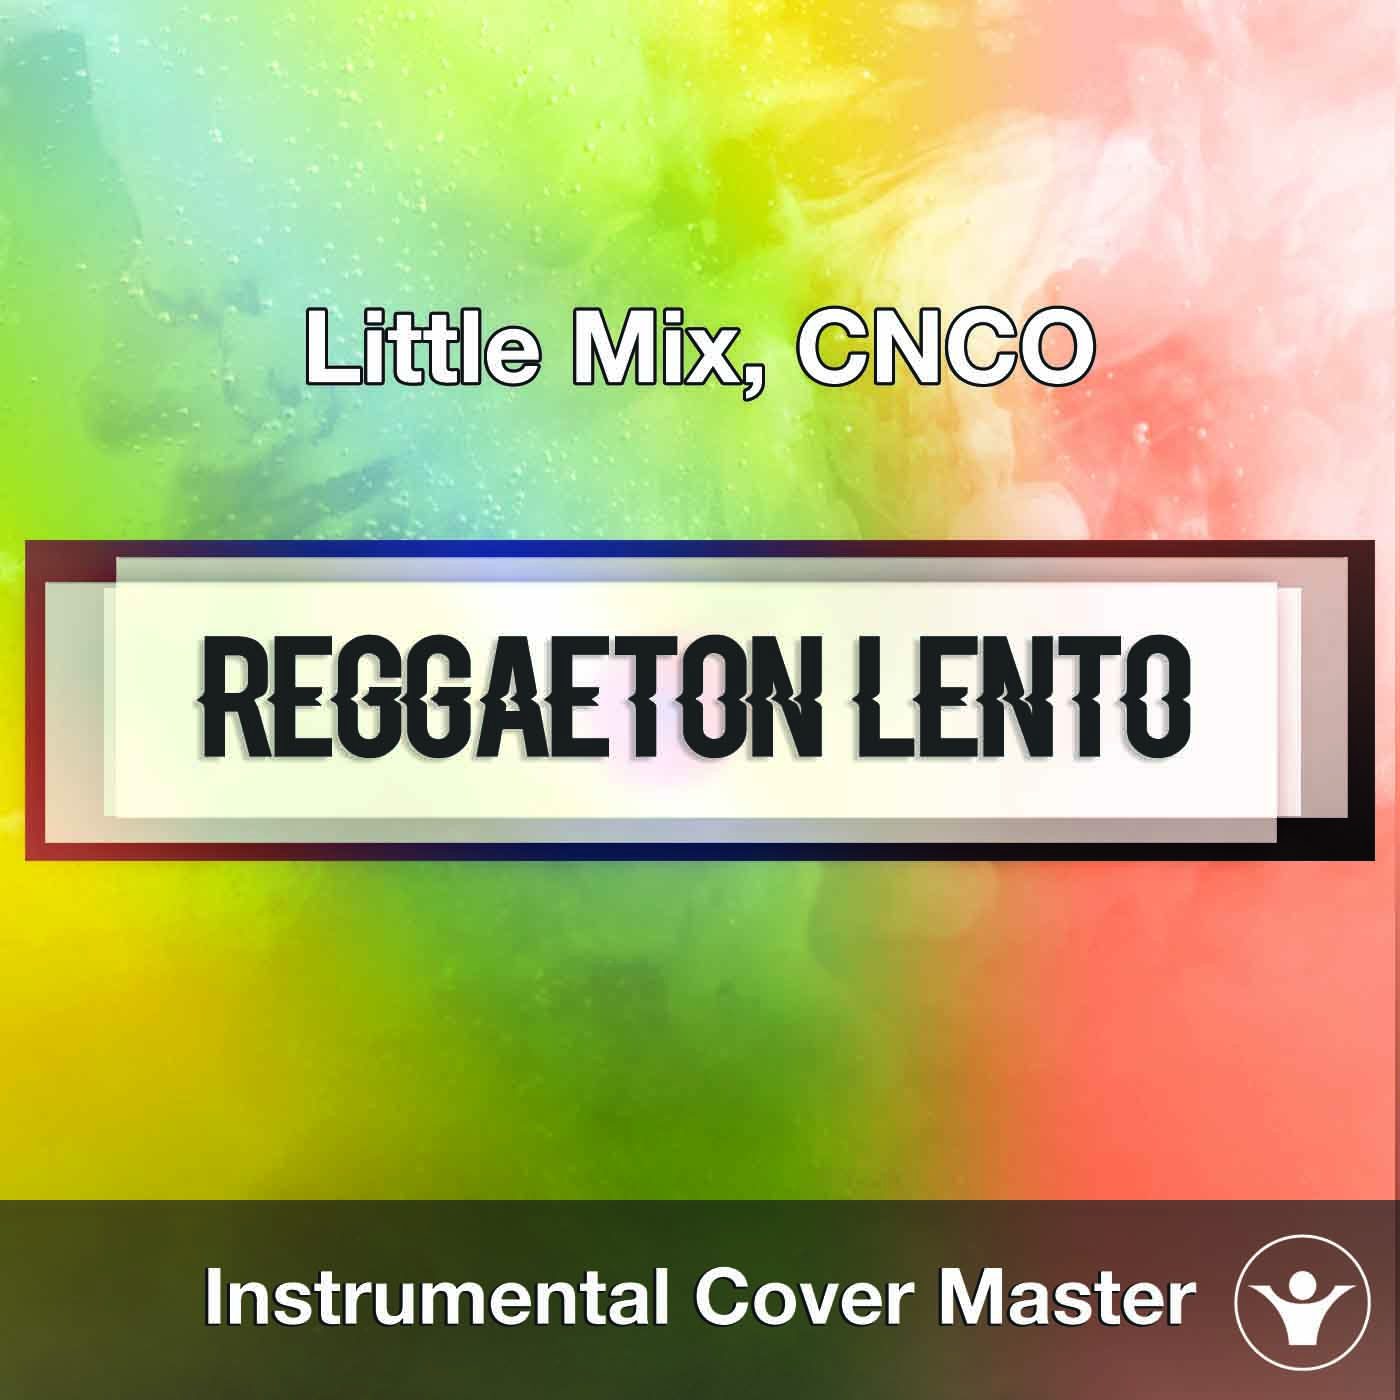 verbo Flor de la ciudad Andes Little Mix, CNCO - Reggaeton Lento (Remix) (Instrumental Cover)